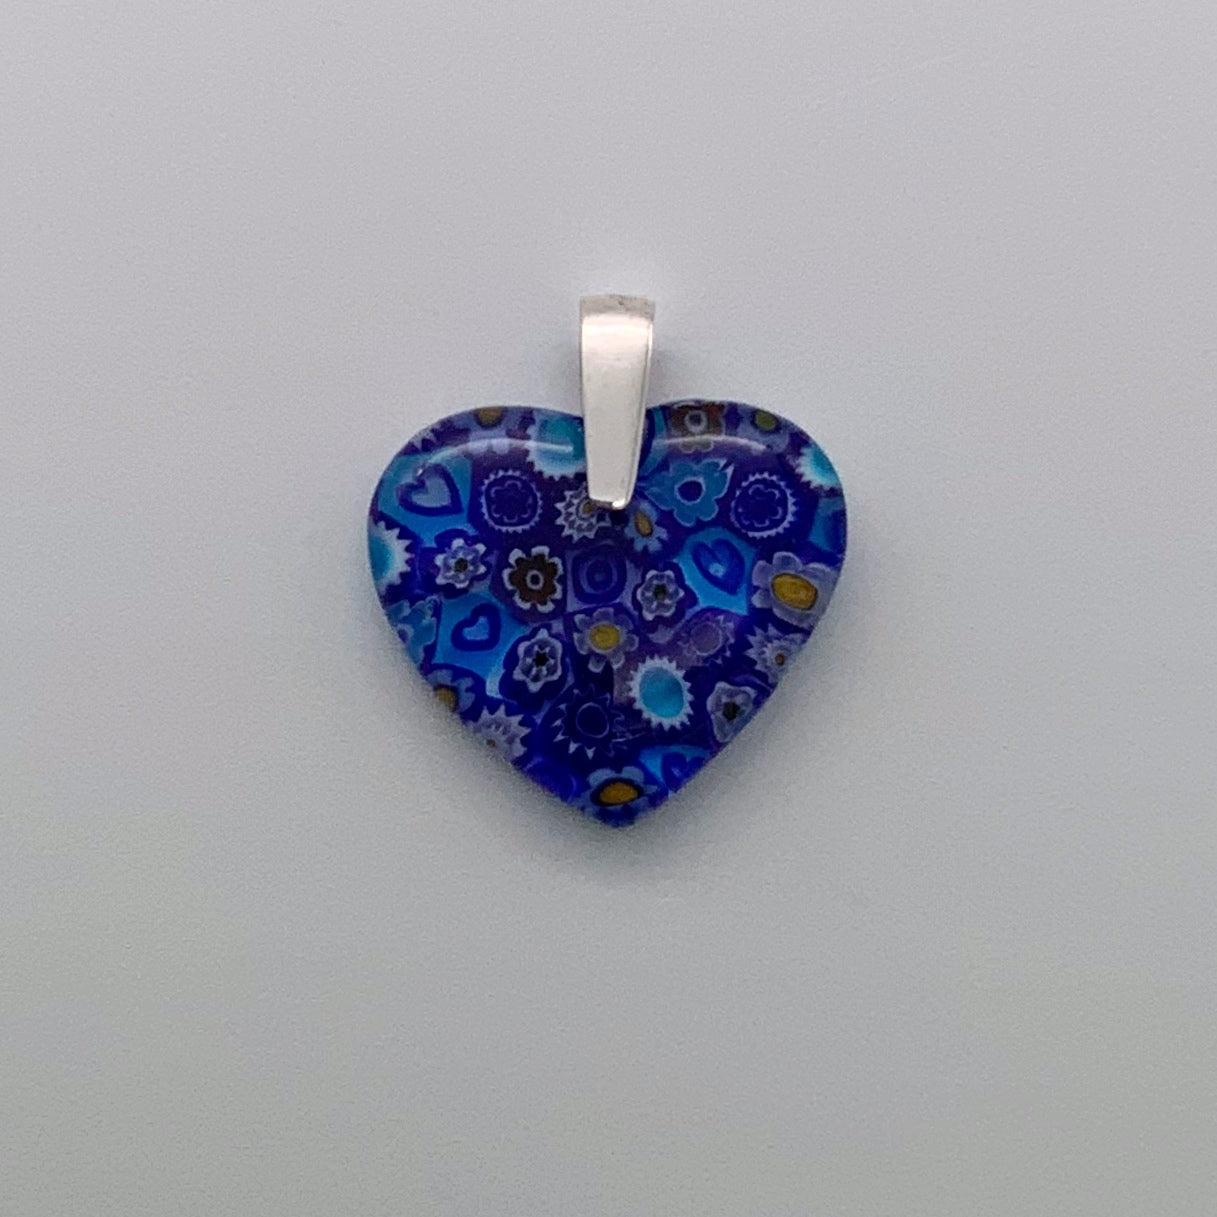 Small navy millefiori glass heart pendant